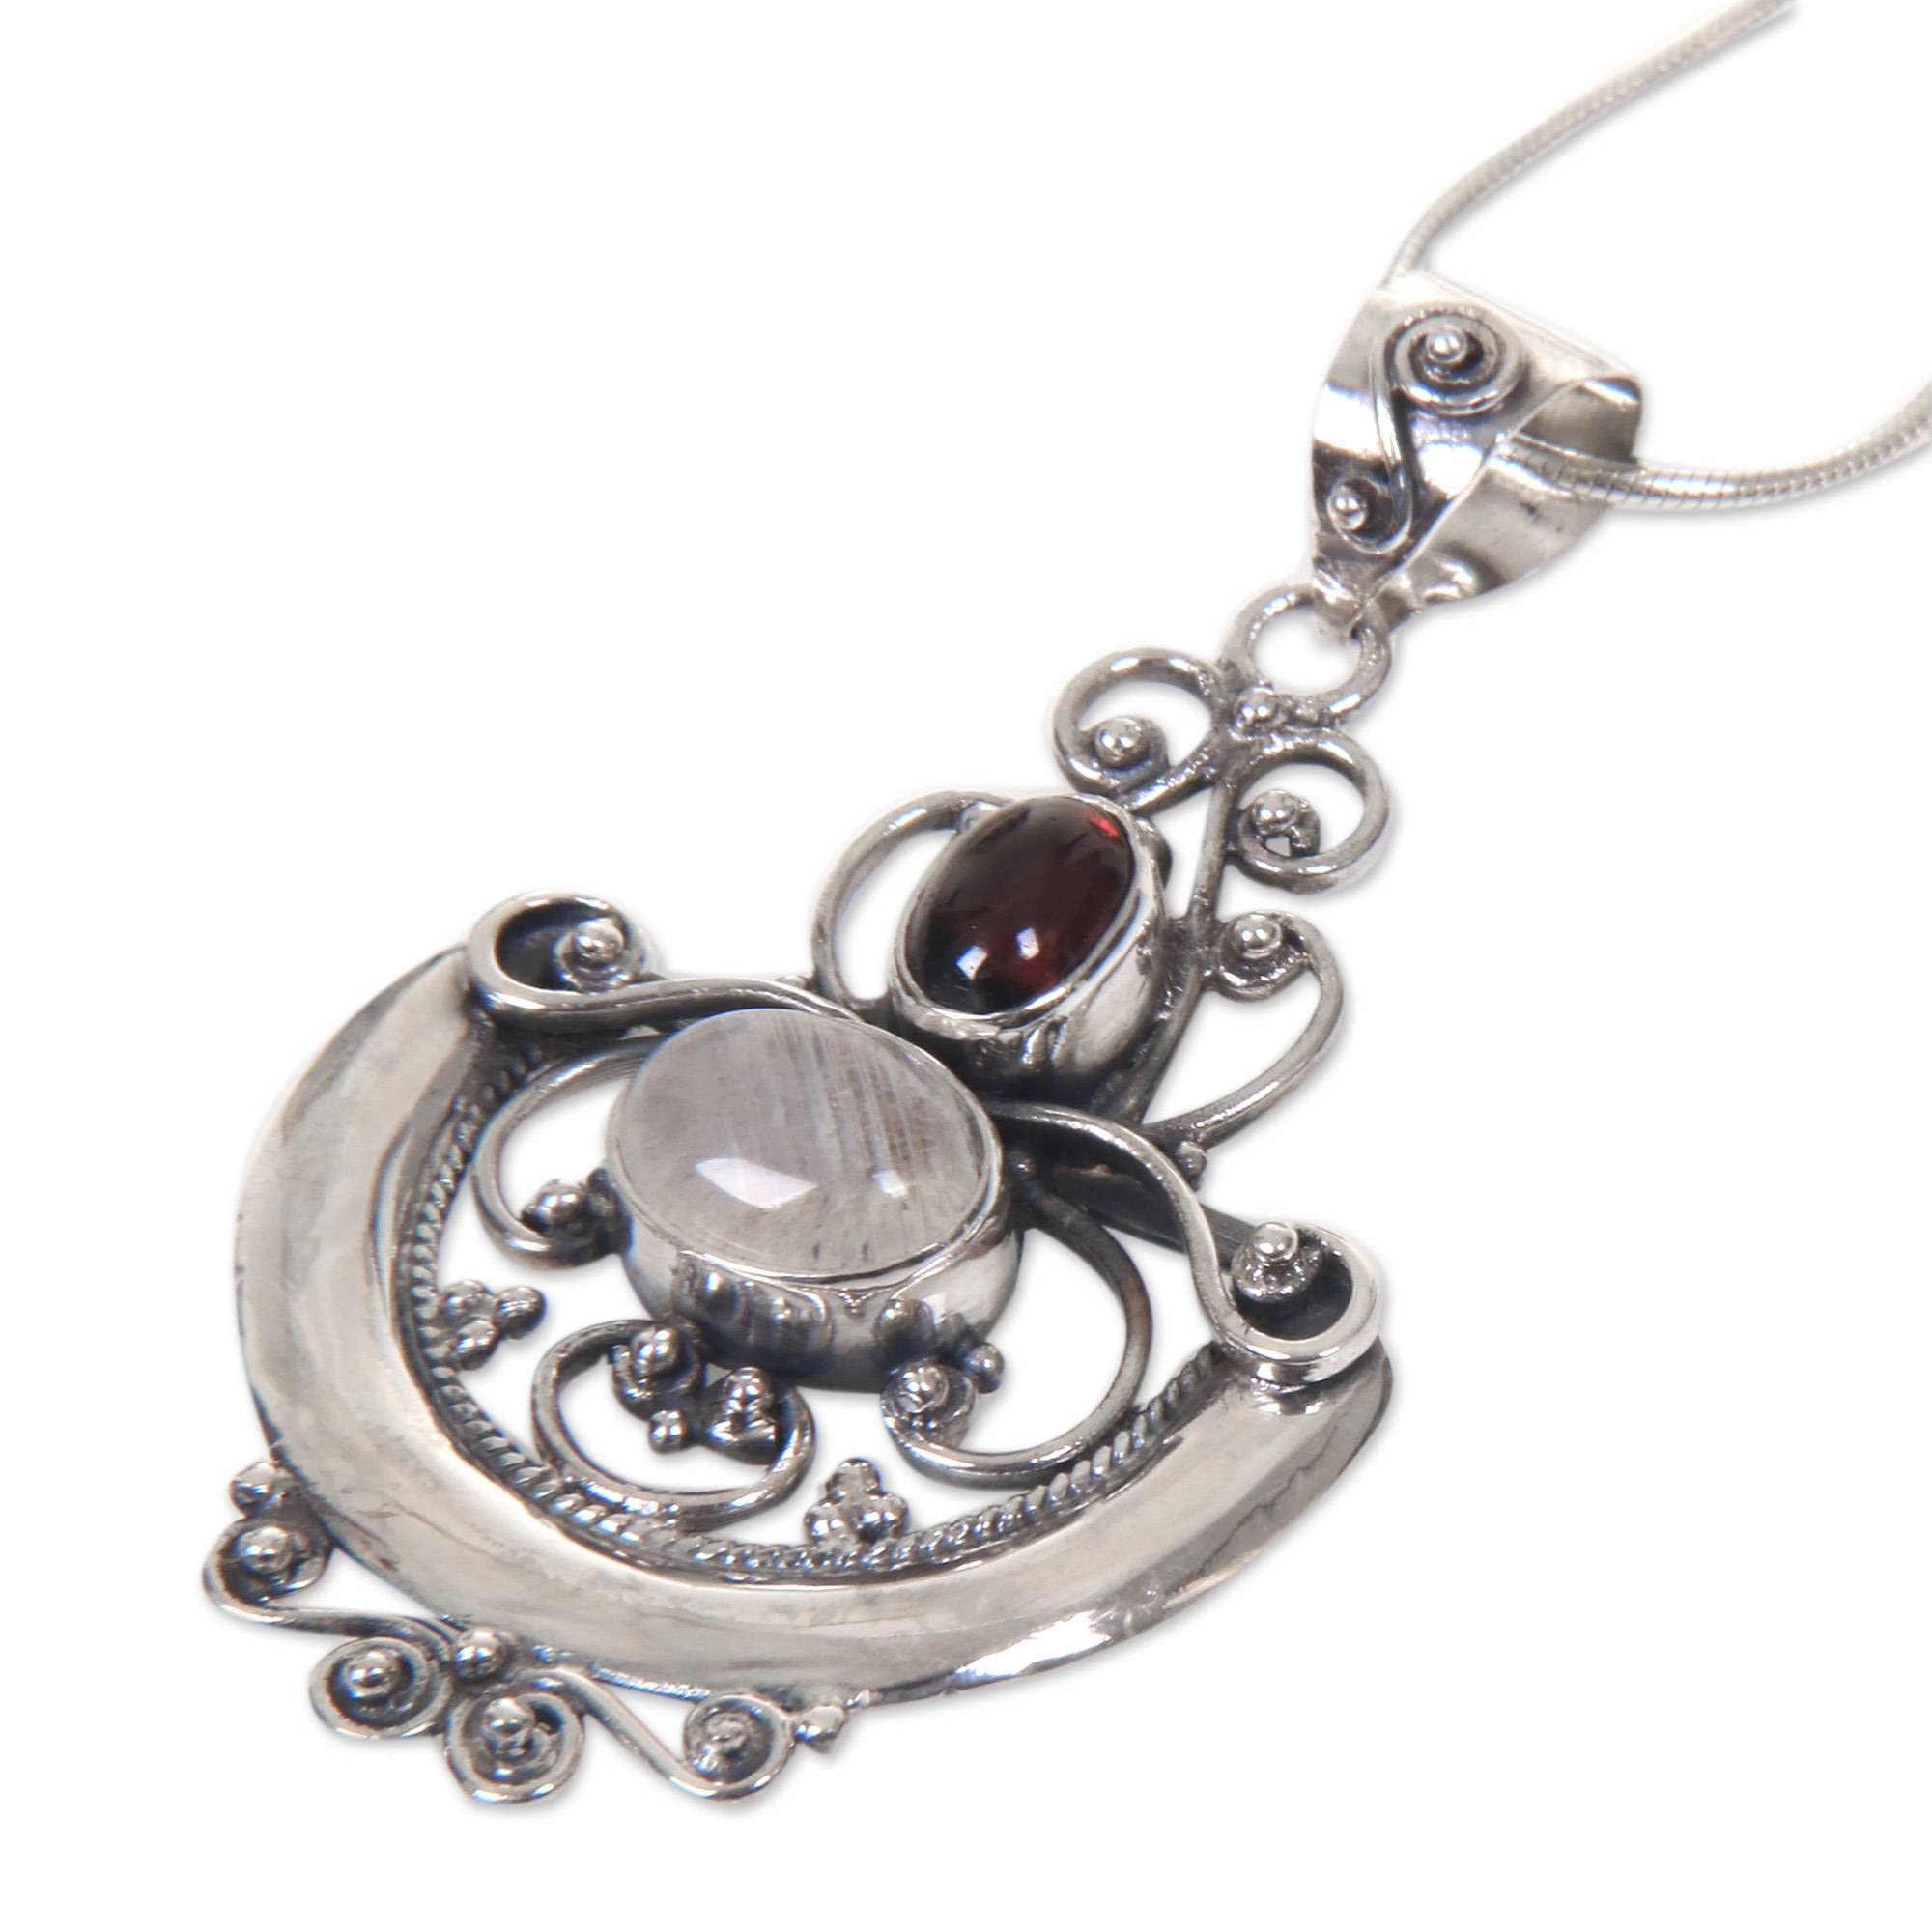 NOVICA .925 Sterling Silver Rainbow Moonstone and Garnet Pendant Necklace, 17